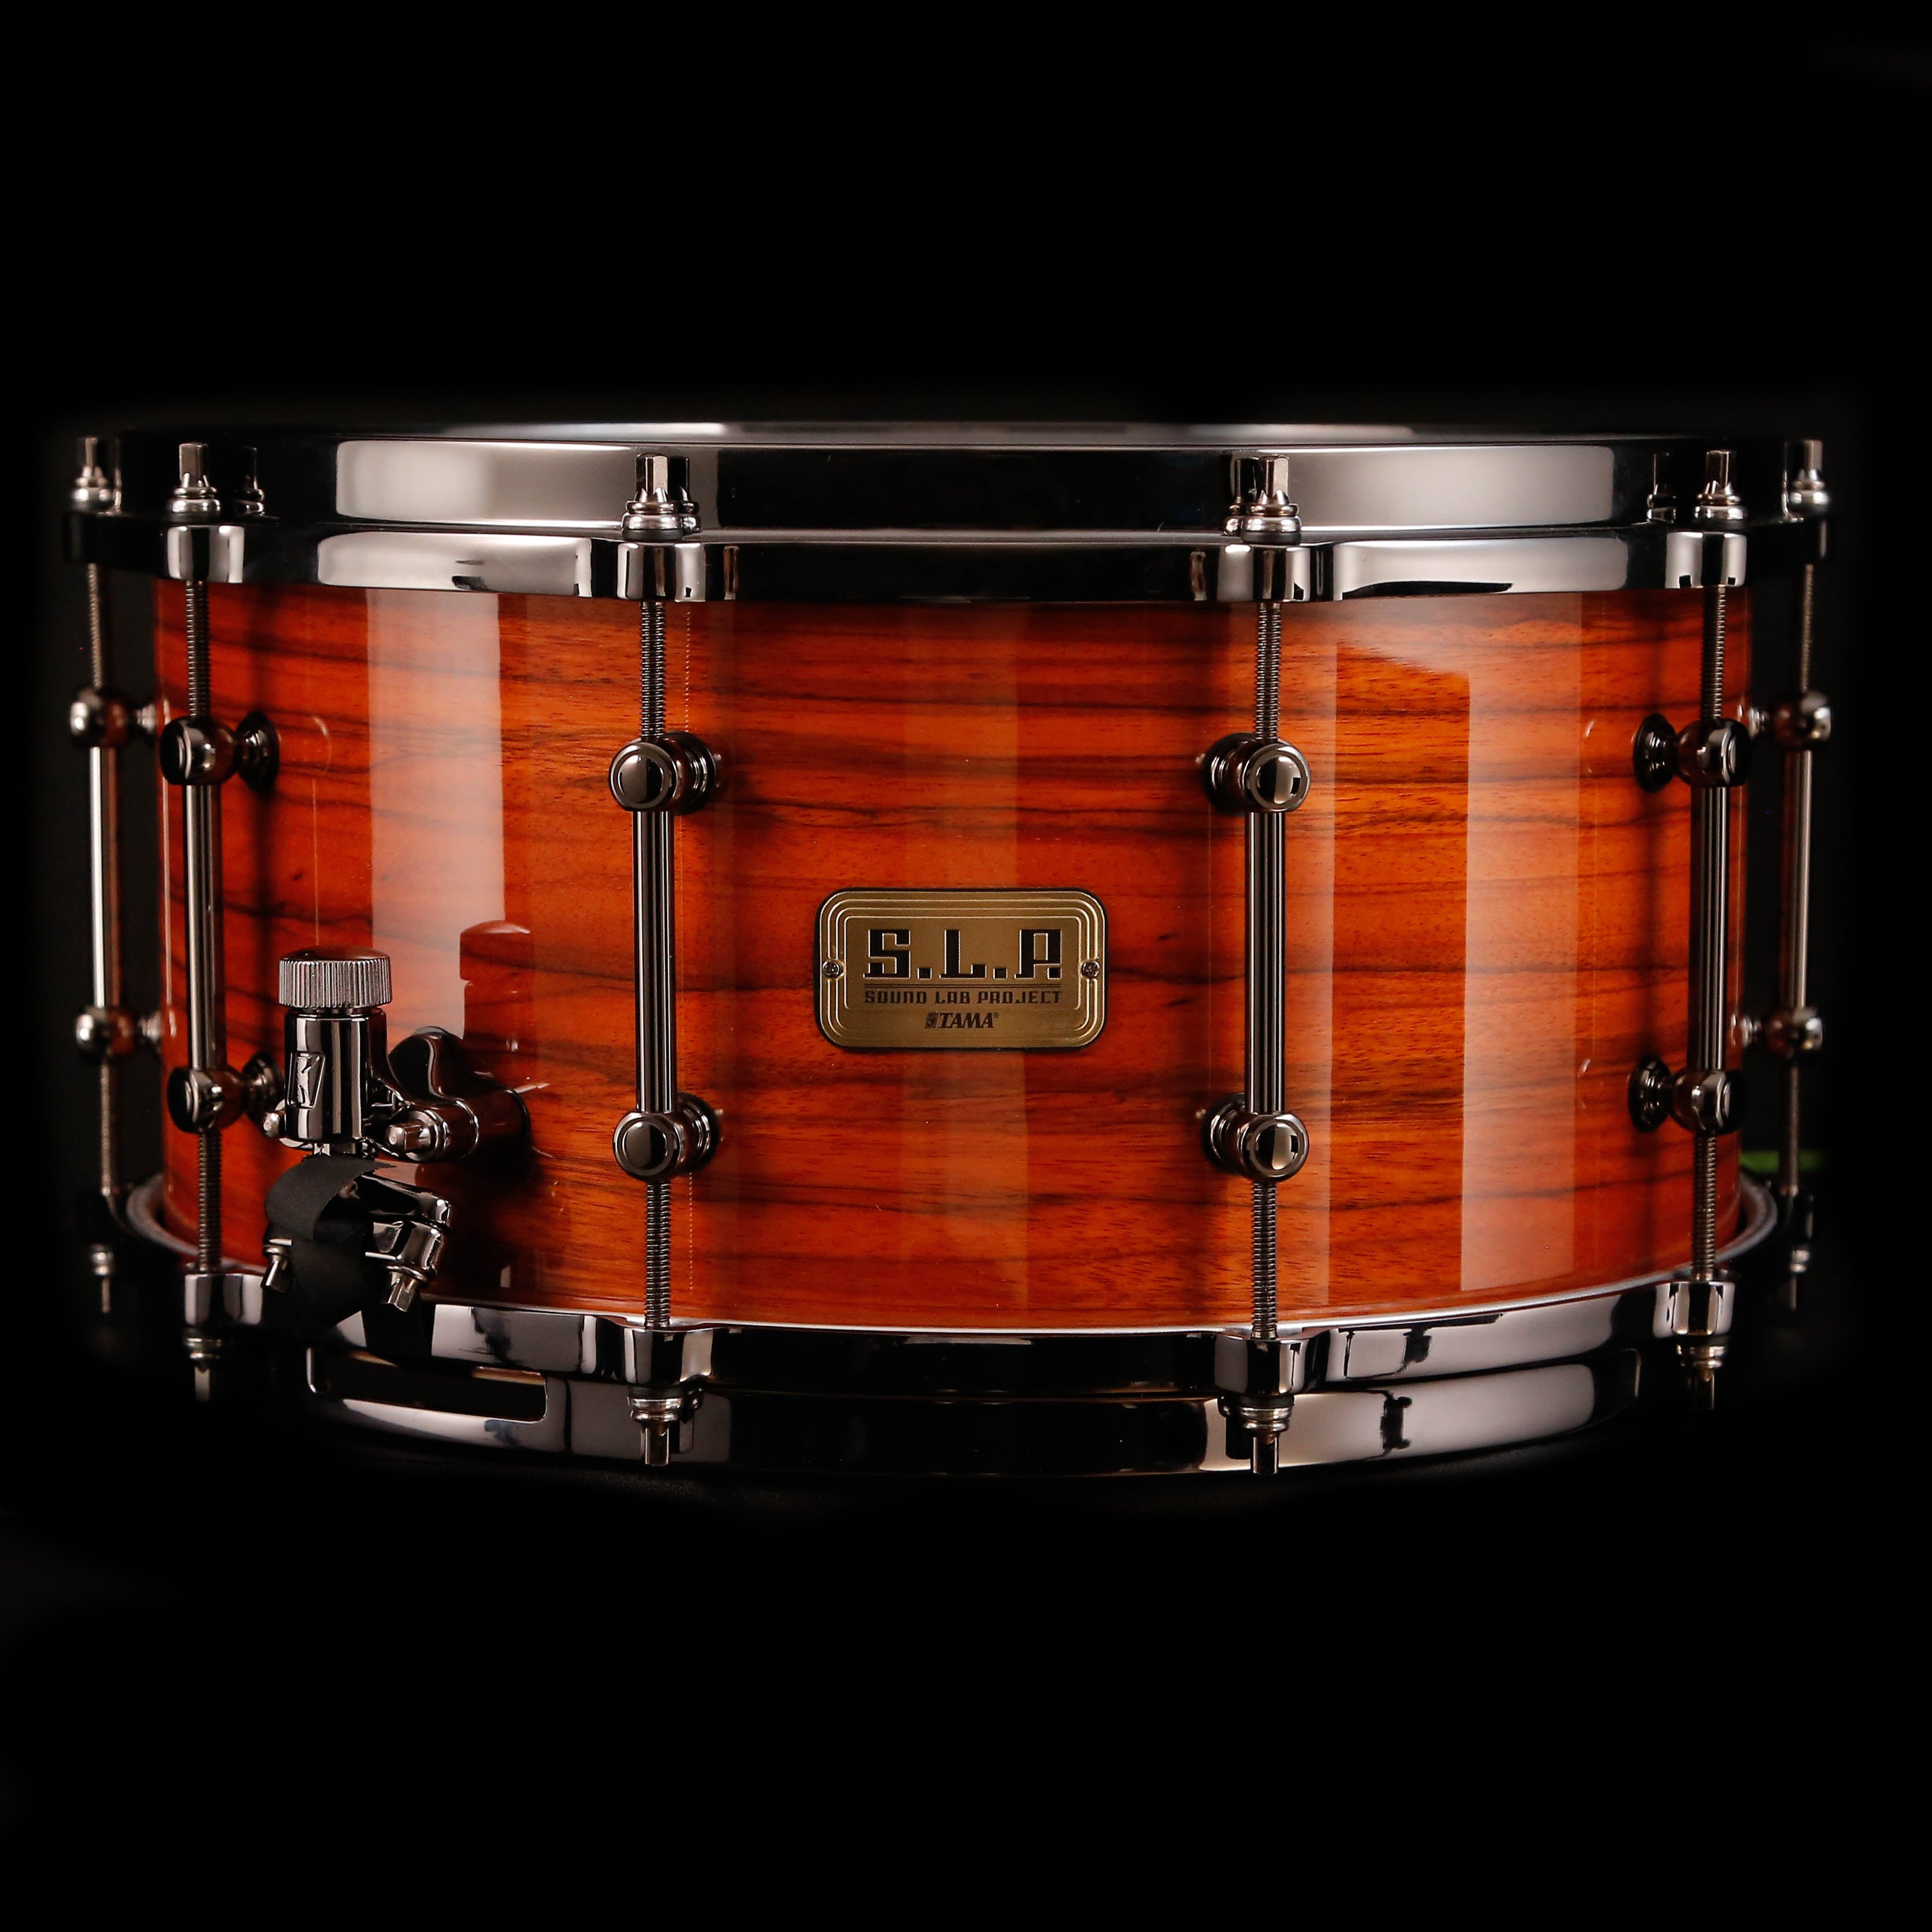 Tama S.L.P. G-Maple Snare Drum - 7-inch x 14-inch - Gloss Tangerine Zebrawood